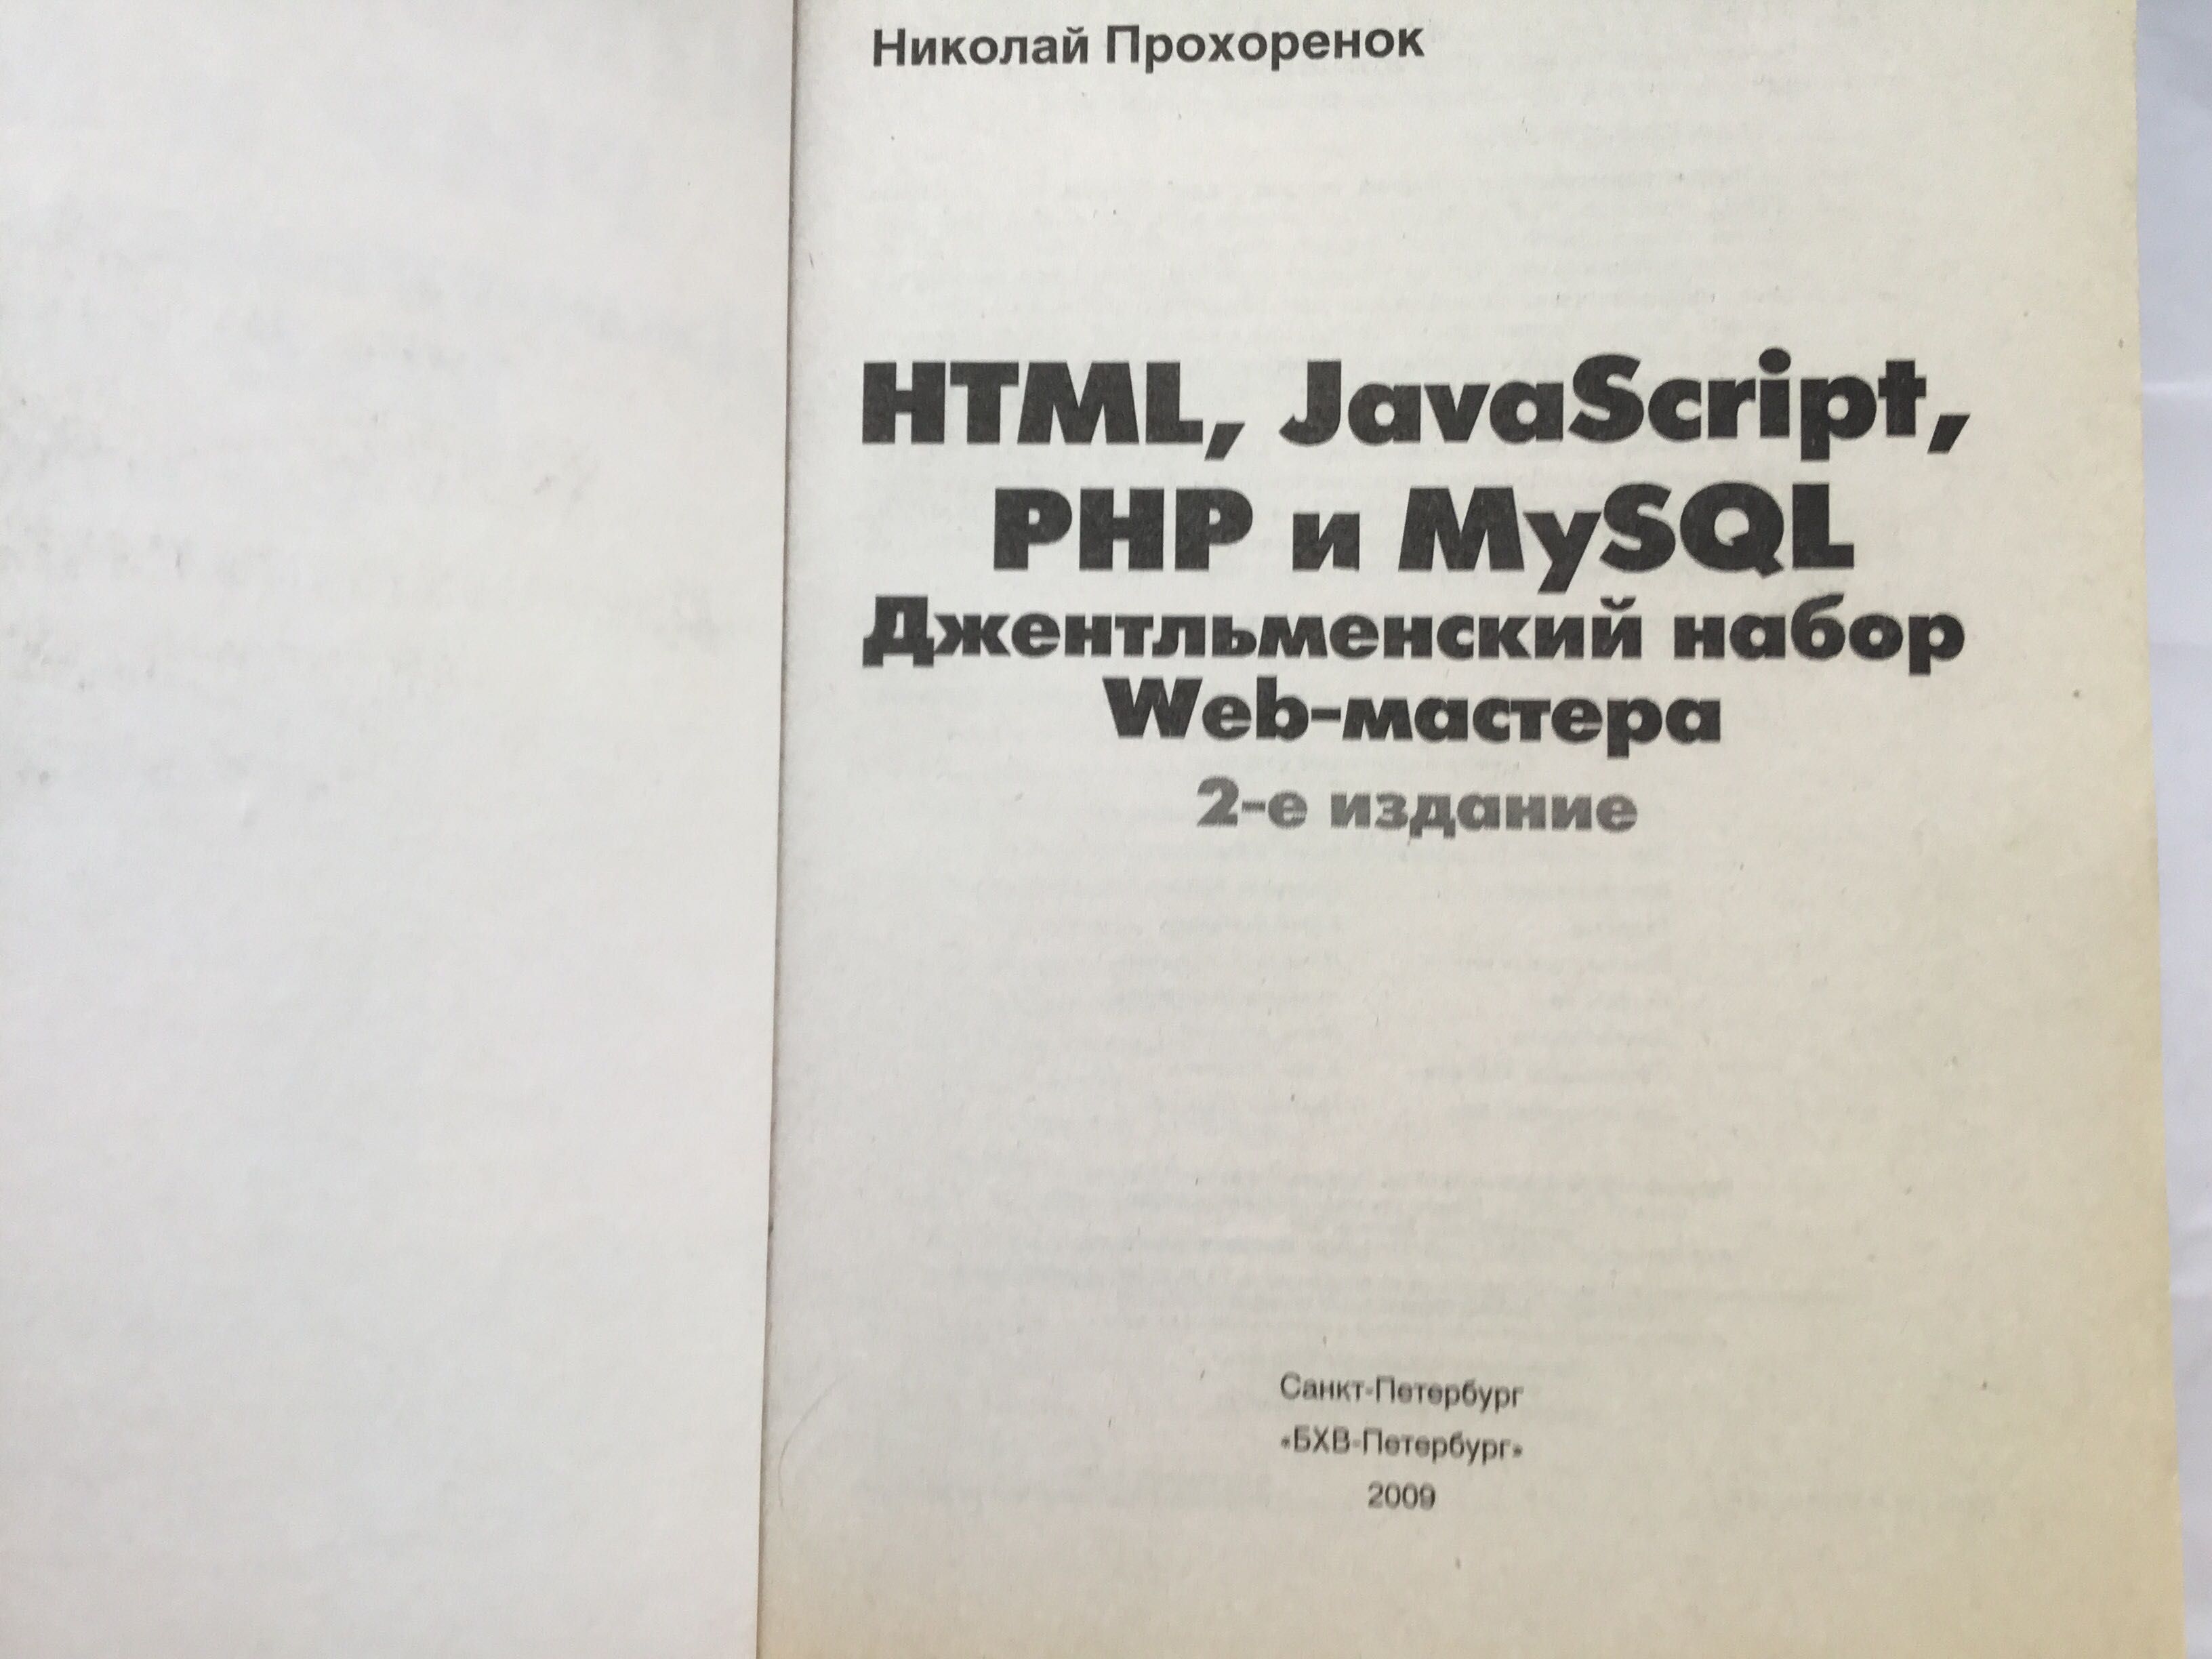 Книга HTML, JavaScript, PHP u MySQL джентльменский набор Web-мастера